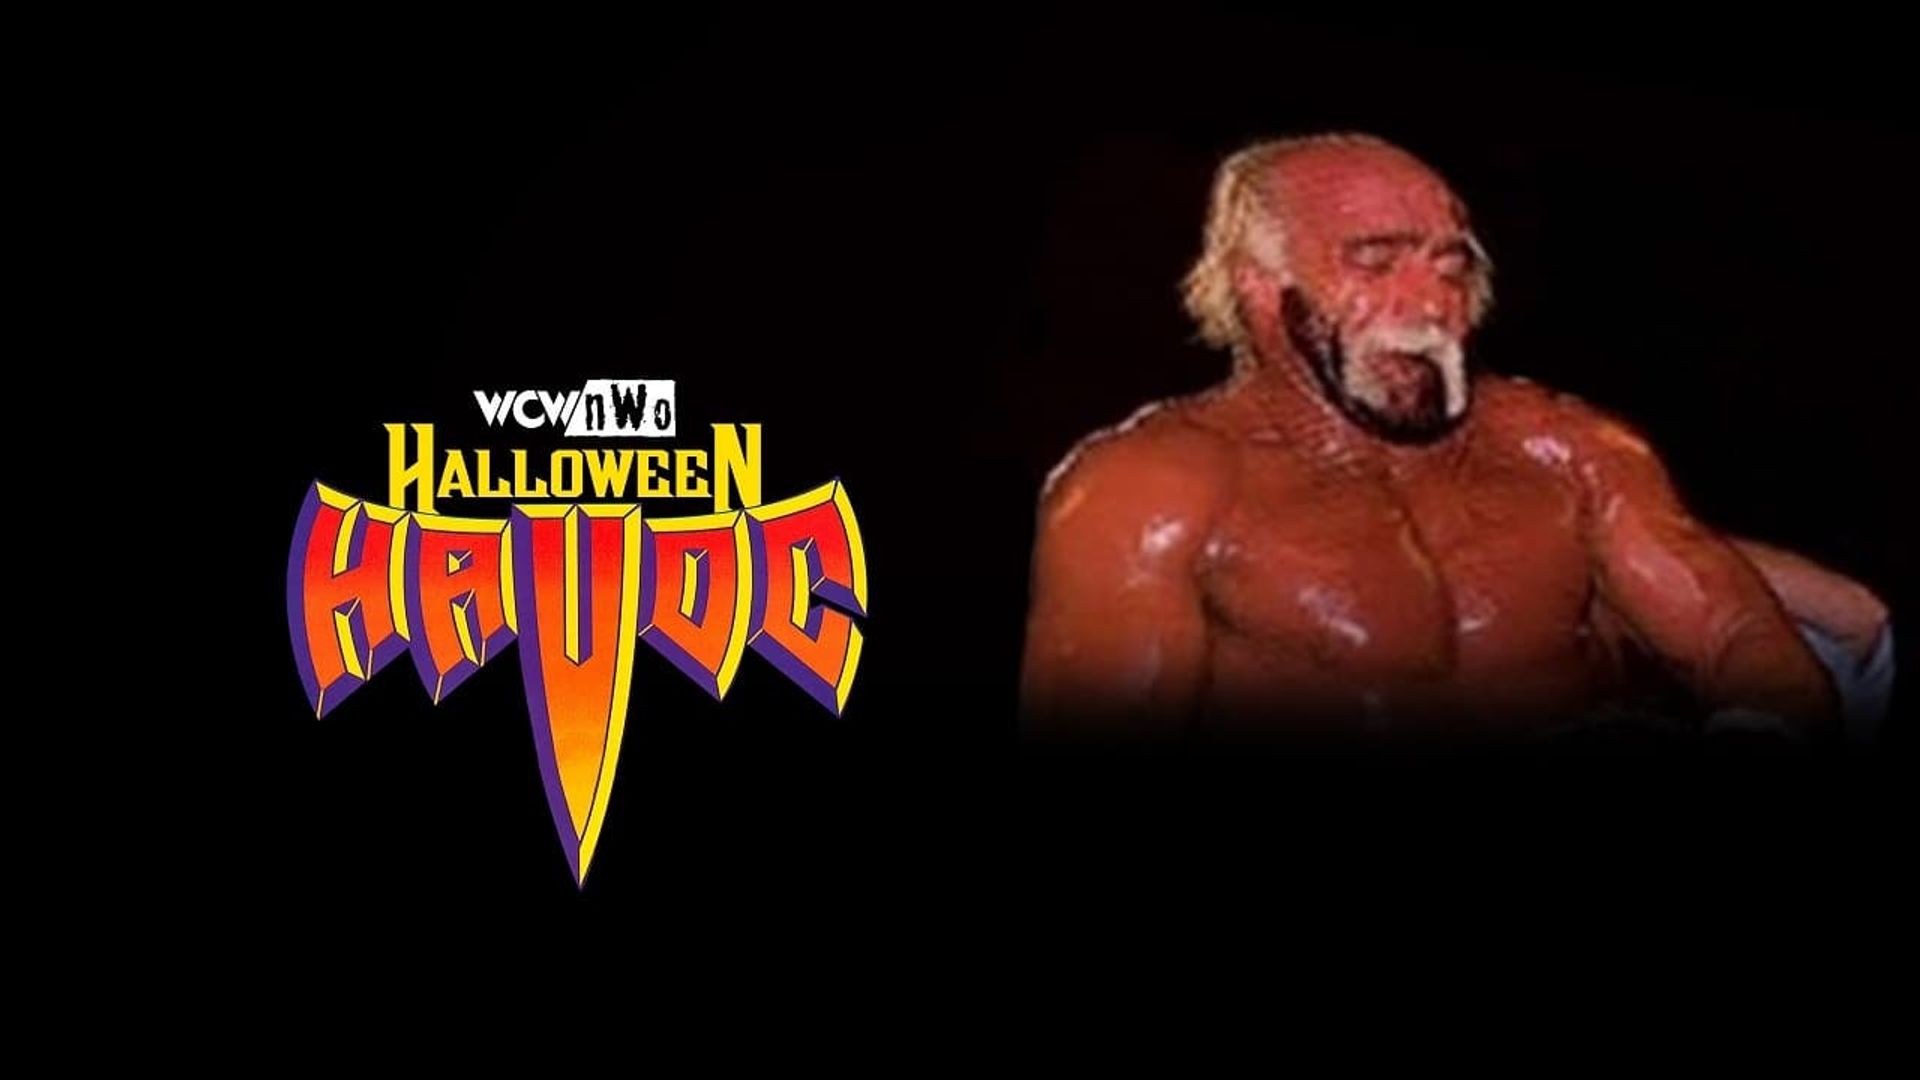 WCW/NWO Halloween Havoc background